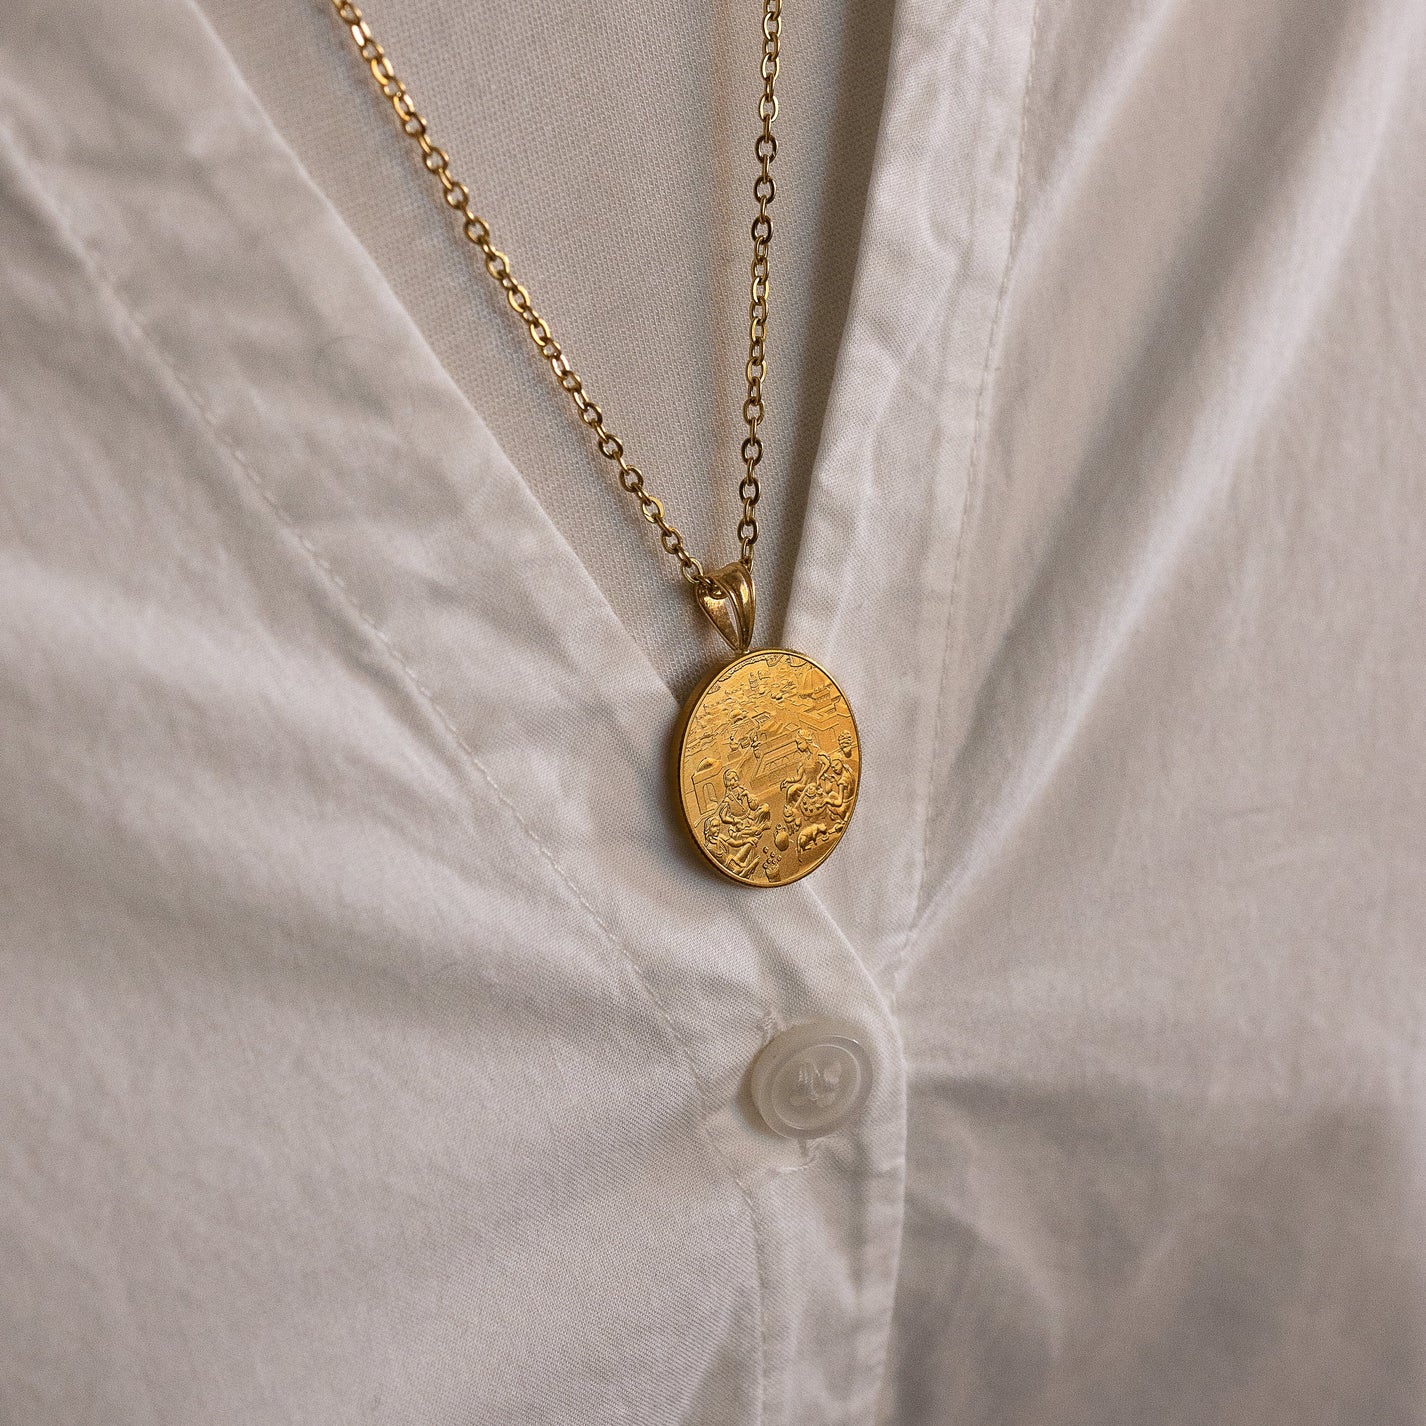 Sorority necklace on the Kasbah of Algiers. - Atelier Indépendant